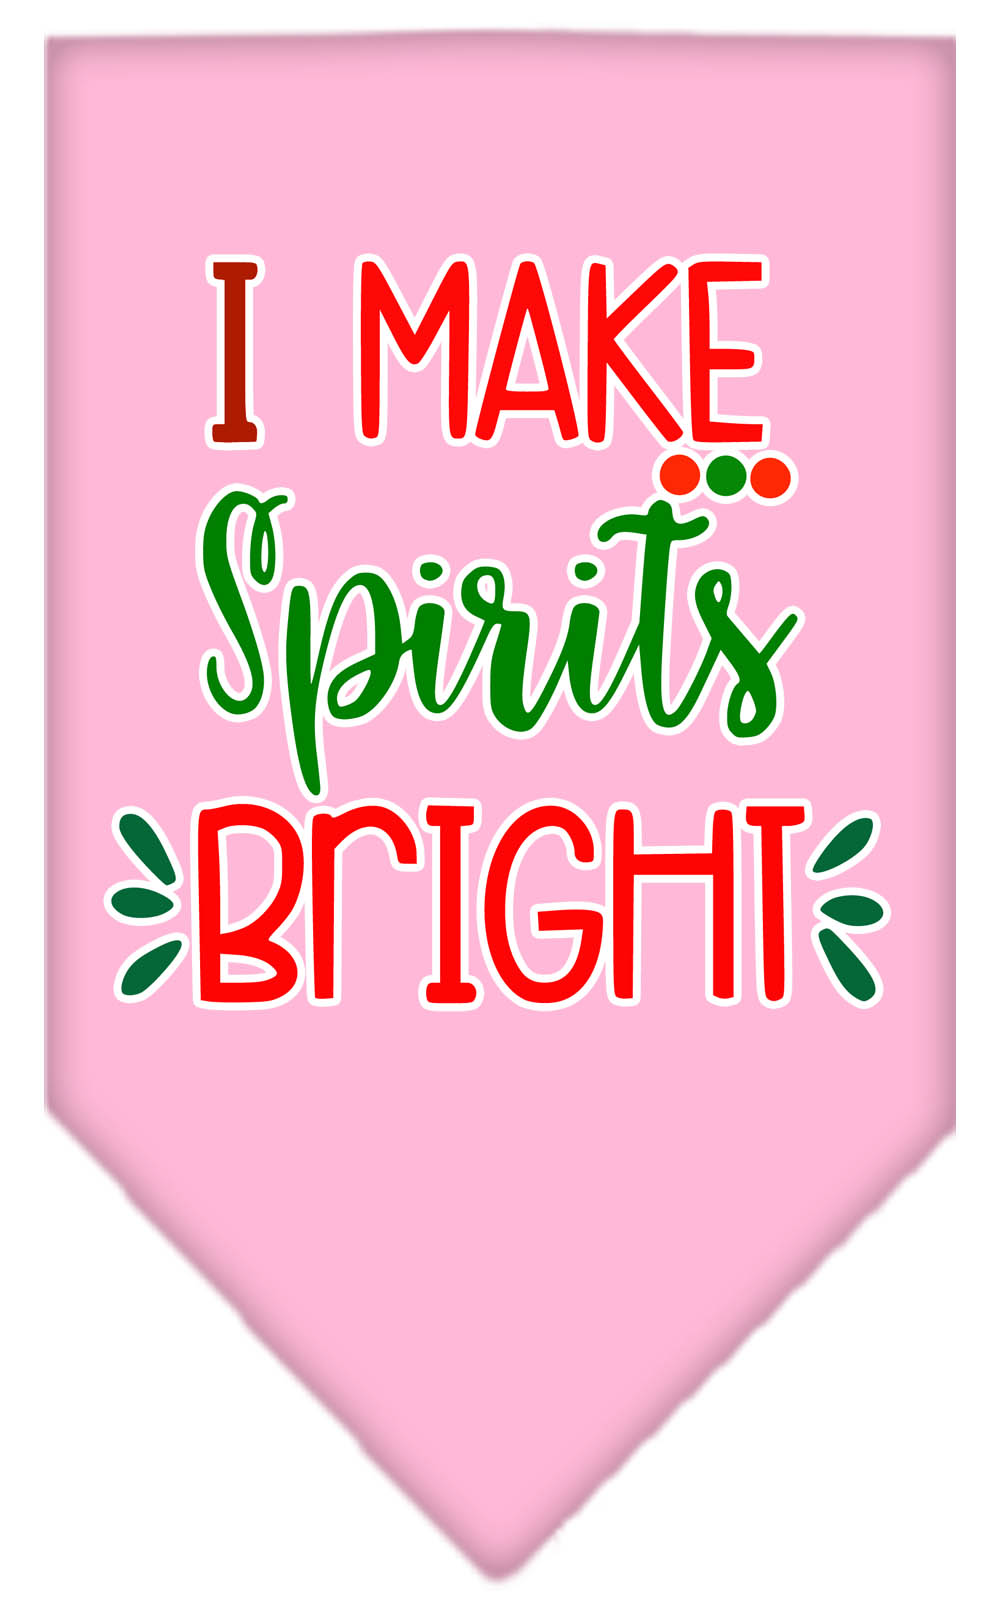 I Make Spirits Bright Screen Print Bandana Light Pink Large